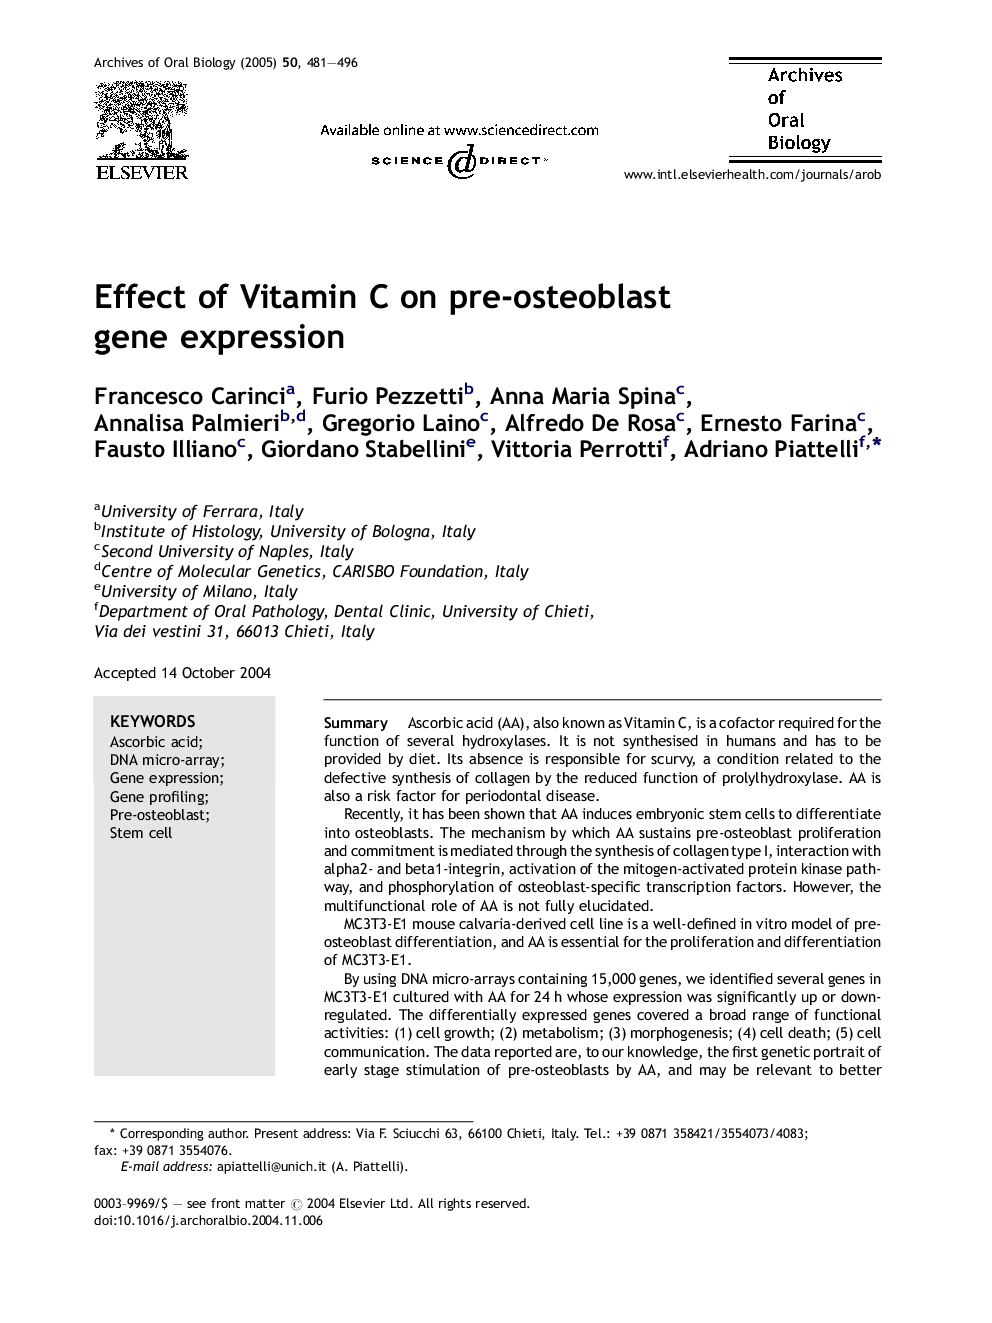 Effect of Vitamin C on pre-osteoblast gene expression